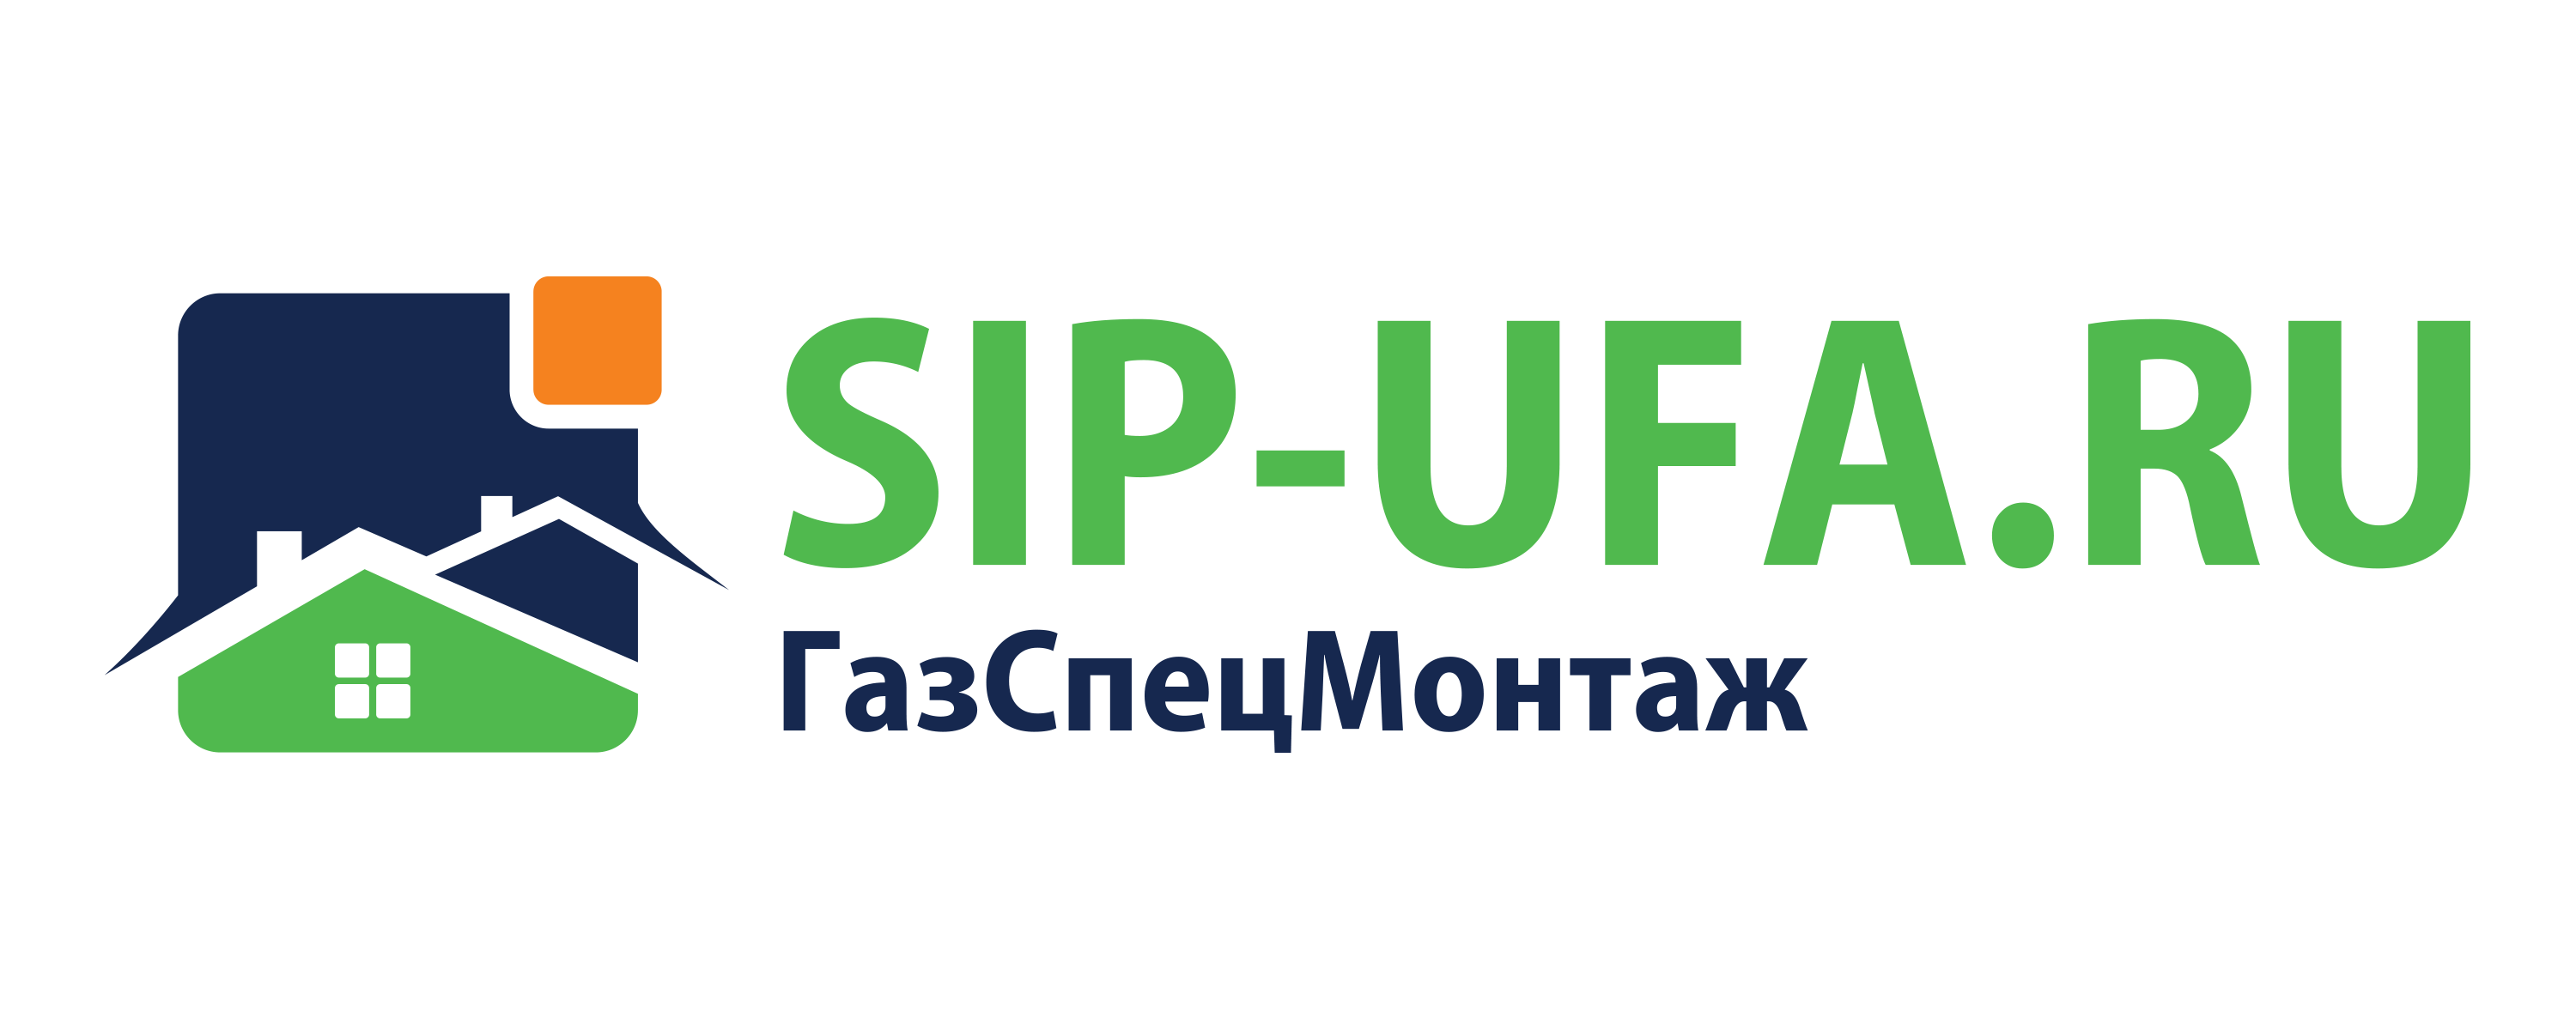  ООО «Газспецмонтаж+» - Село Чесноковка logo (7).png